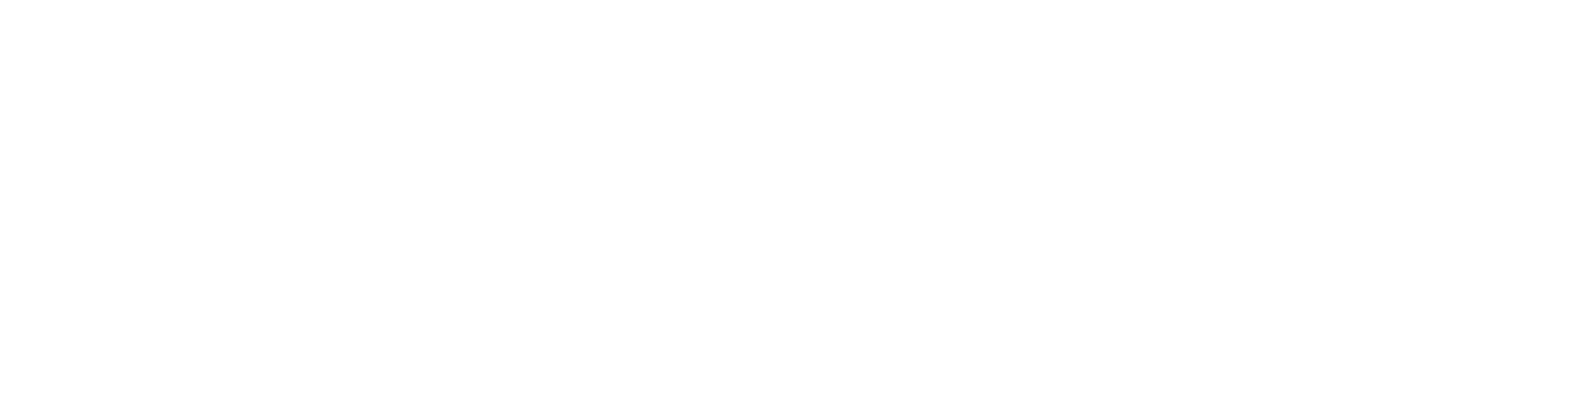 Howmet Aerospace
 logo large for dark backgrounds (transparent PNG)